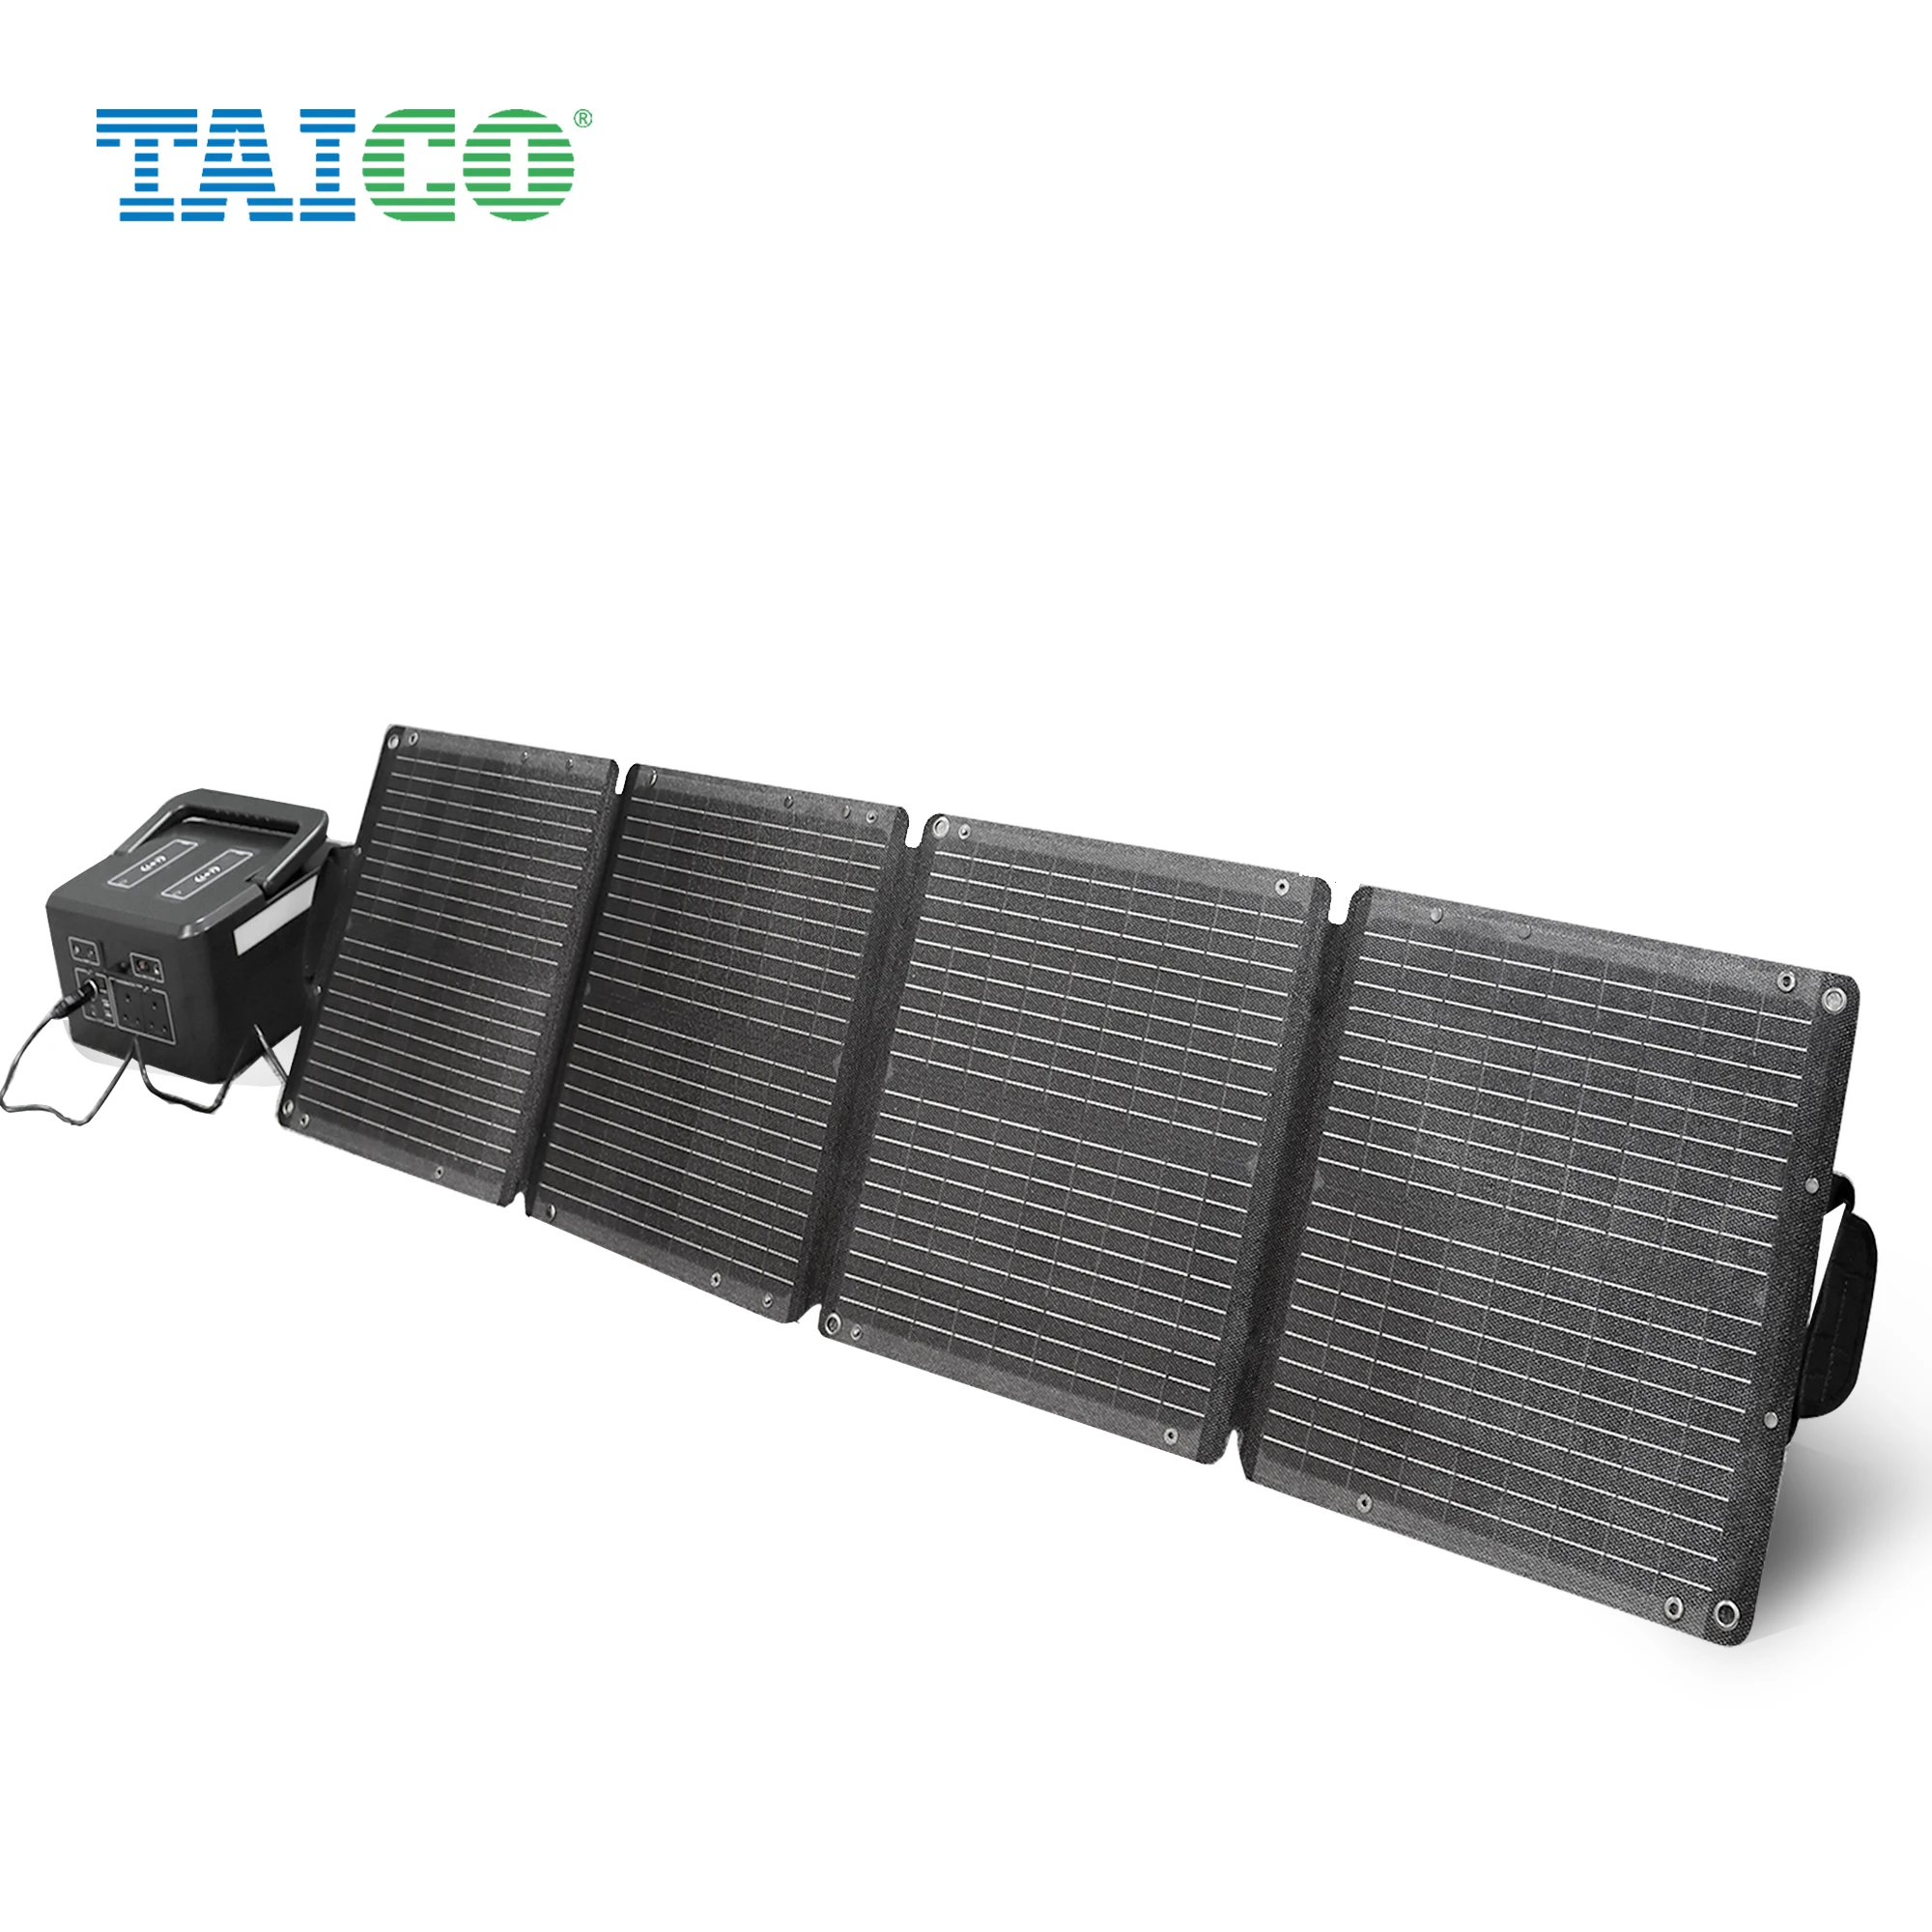 

TAICO 100w 20v Mono Foldable Portable Solar Panel Backpack Etfe Flexible Solar Panels For Camping